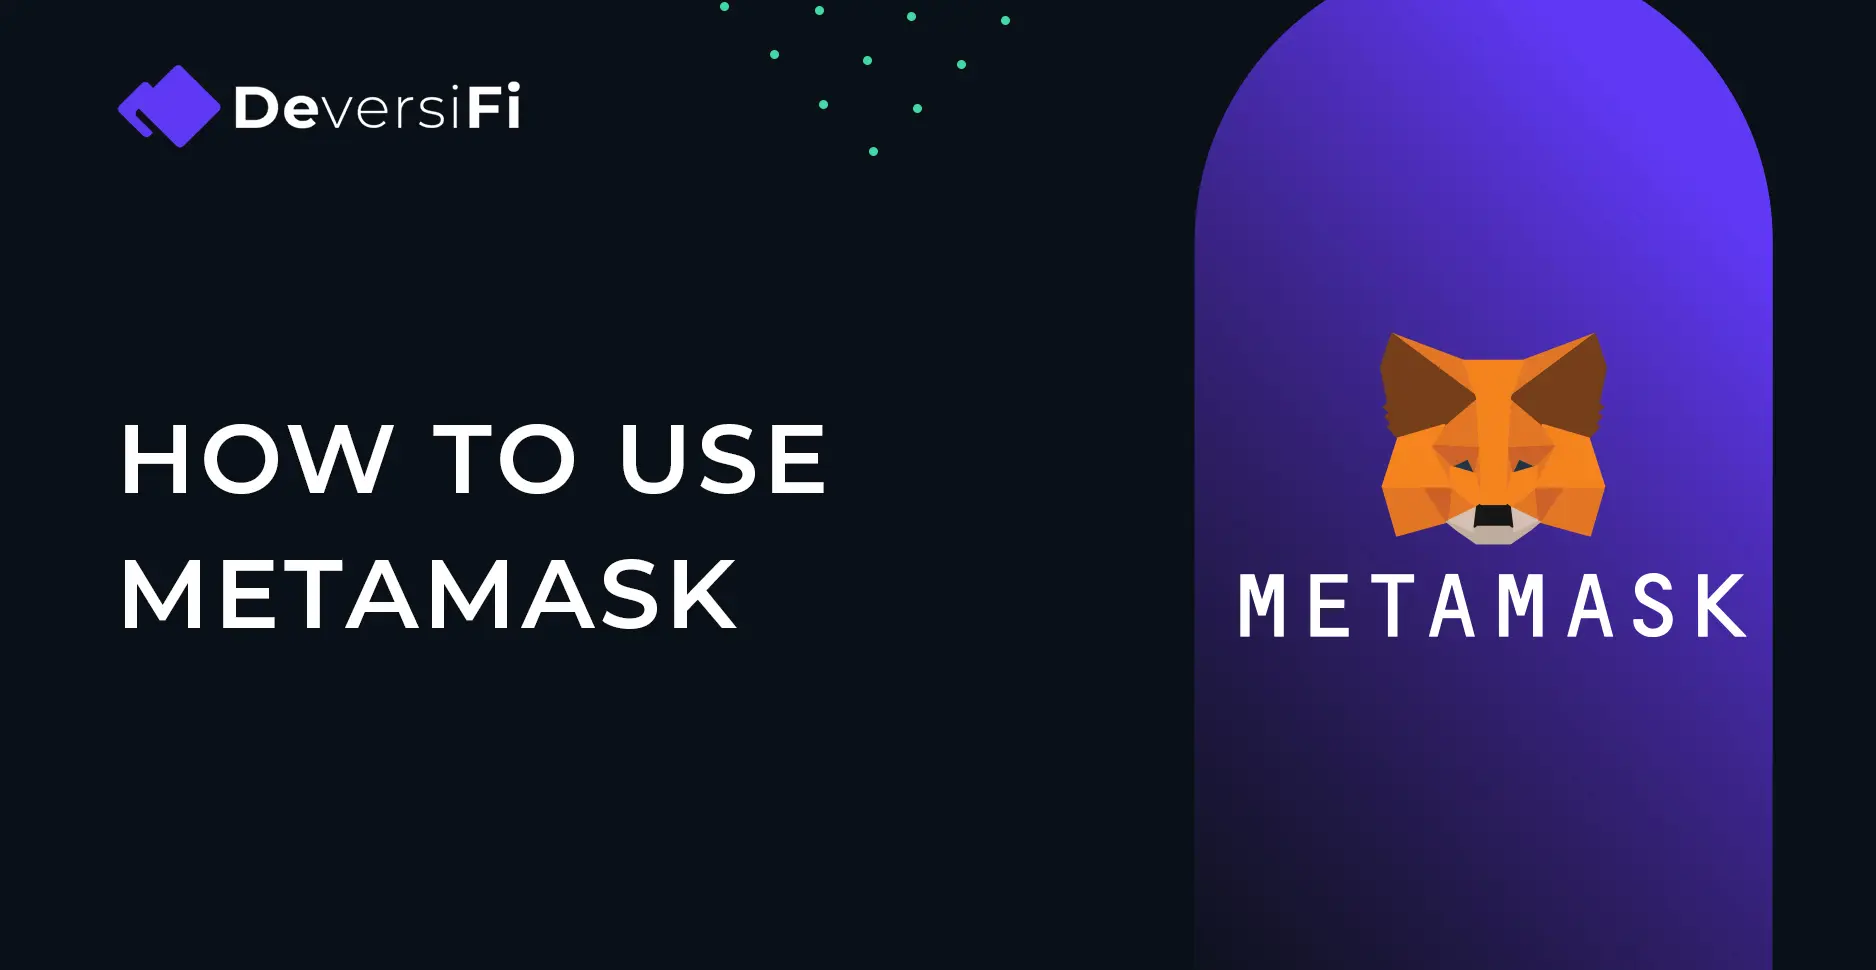 Key Features of MetaMask: